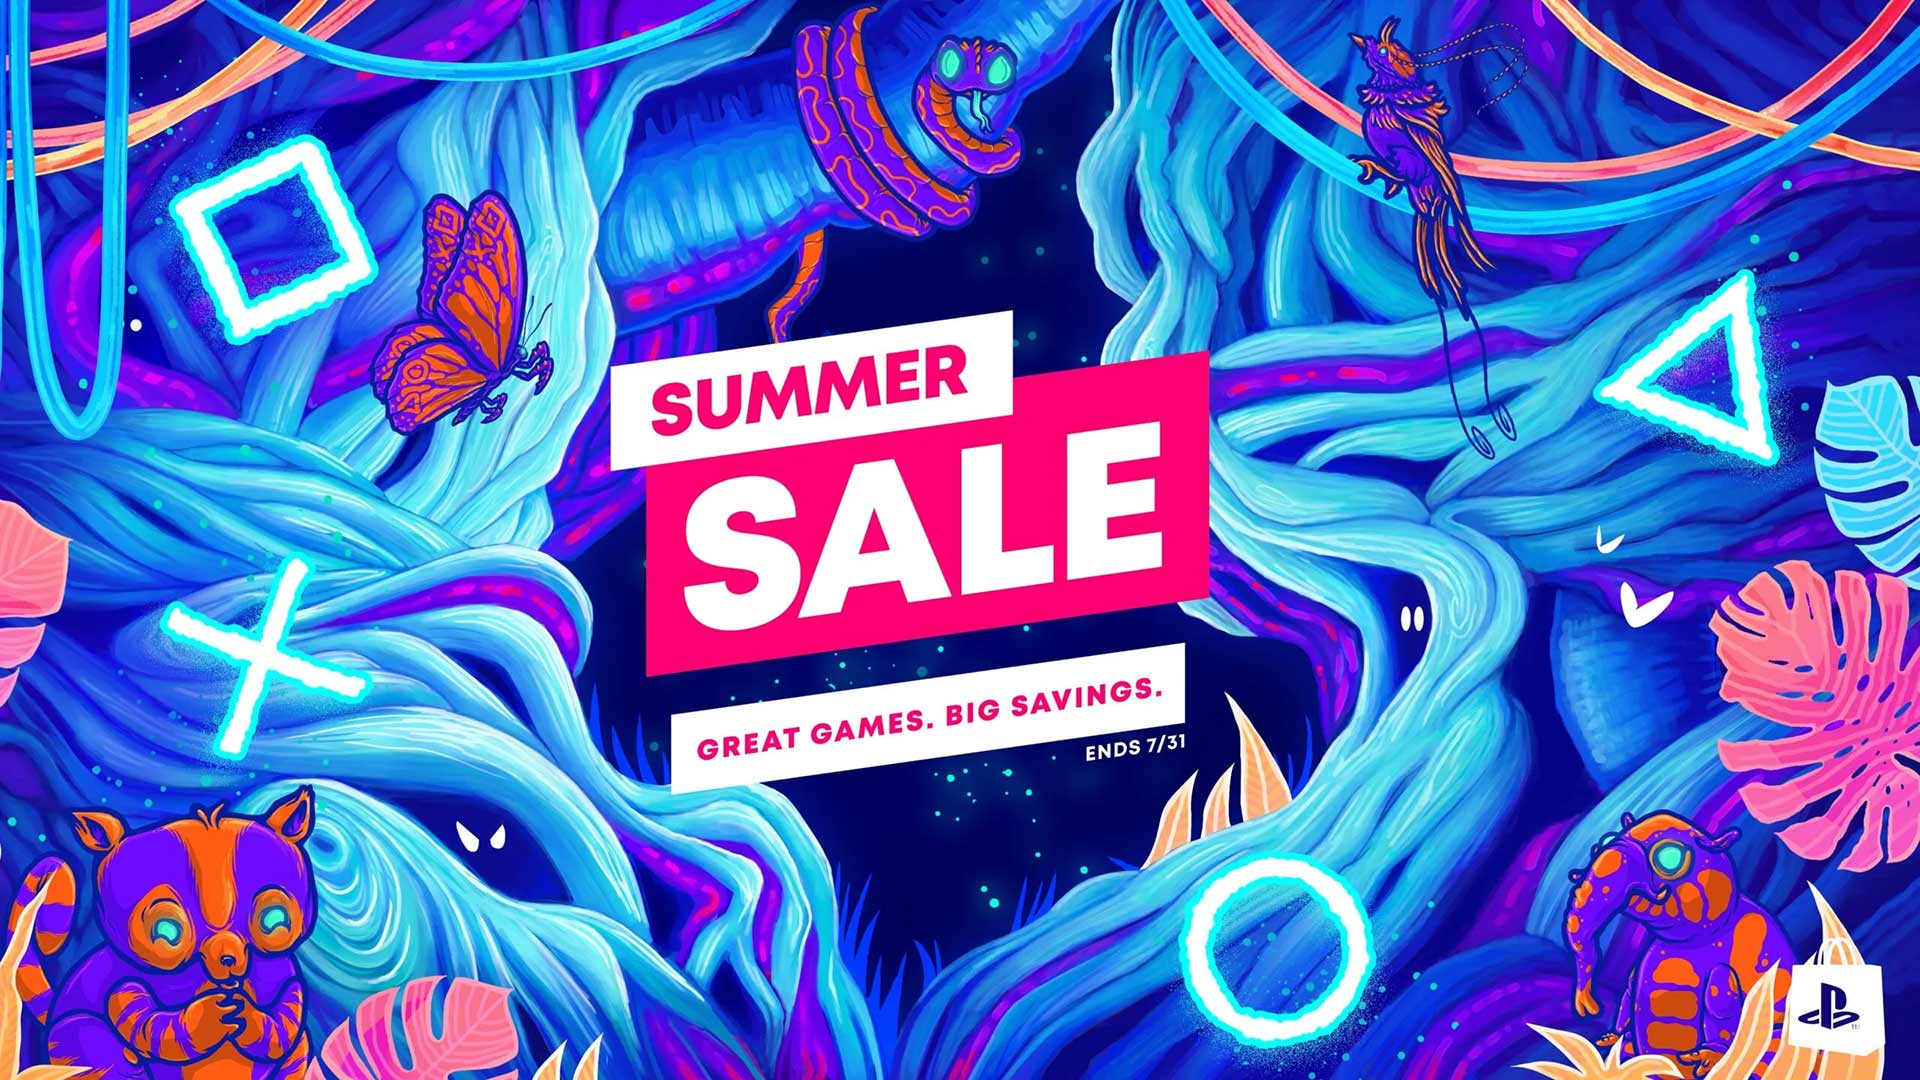 The PlayStation Summer Sale kicks off on July 17